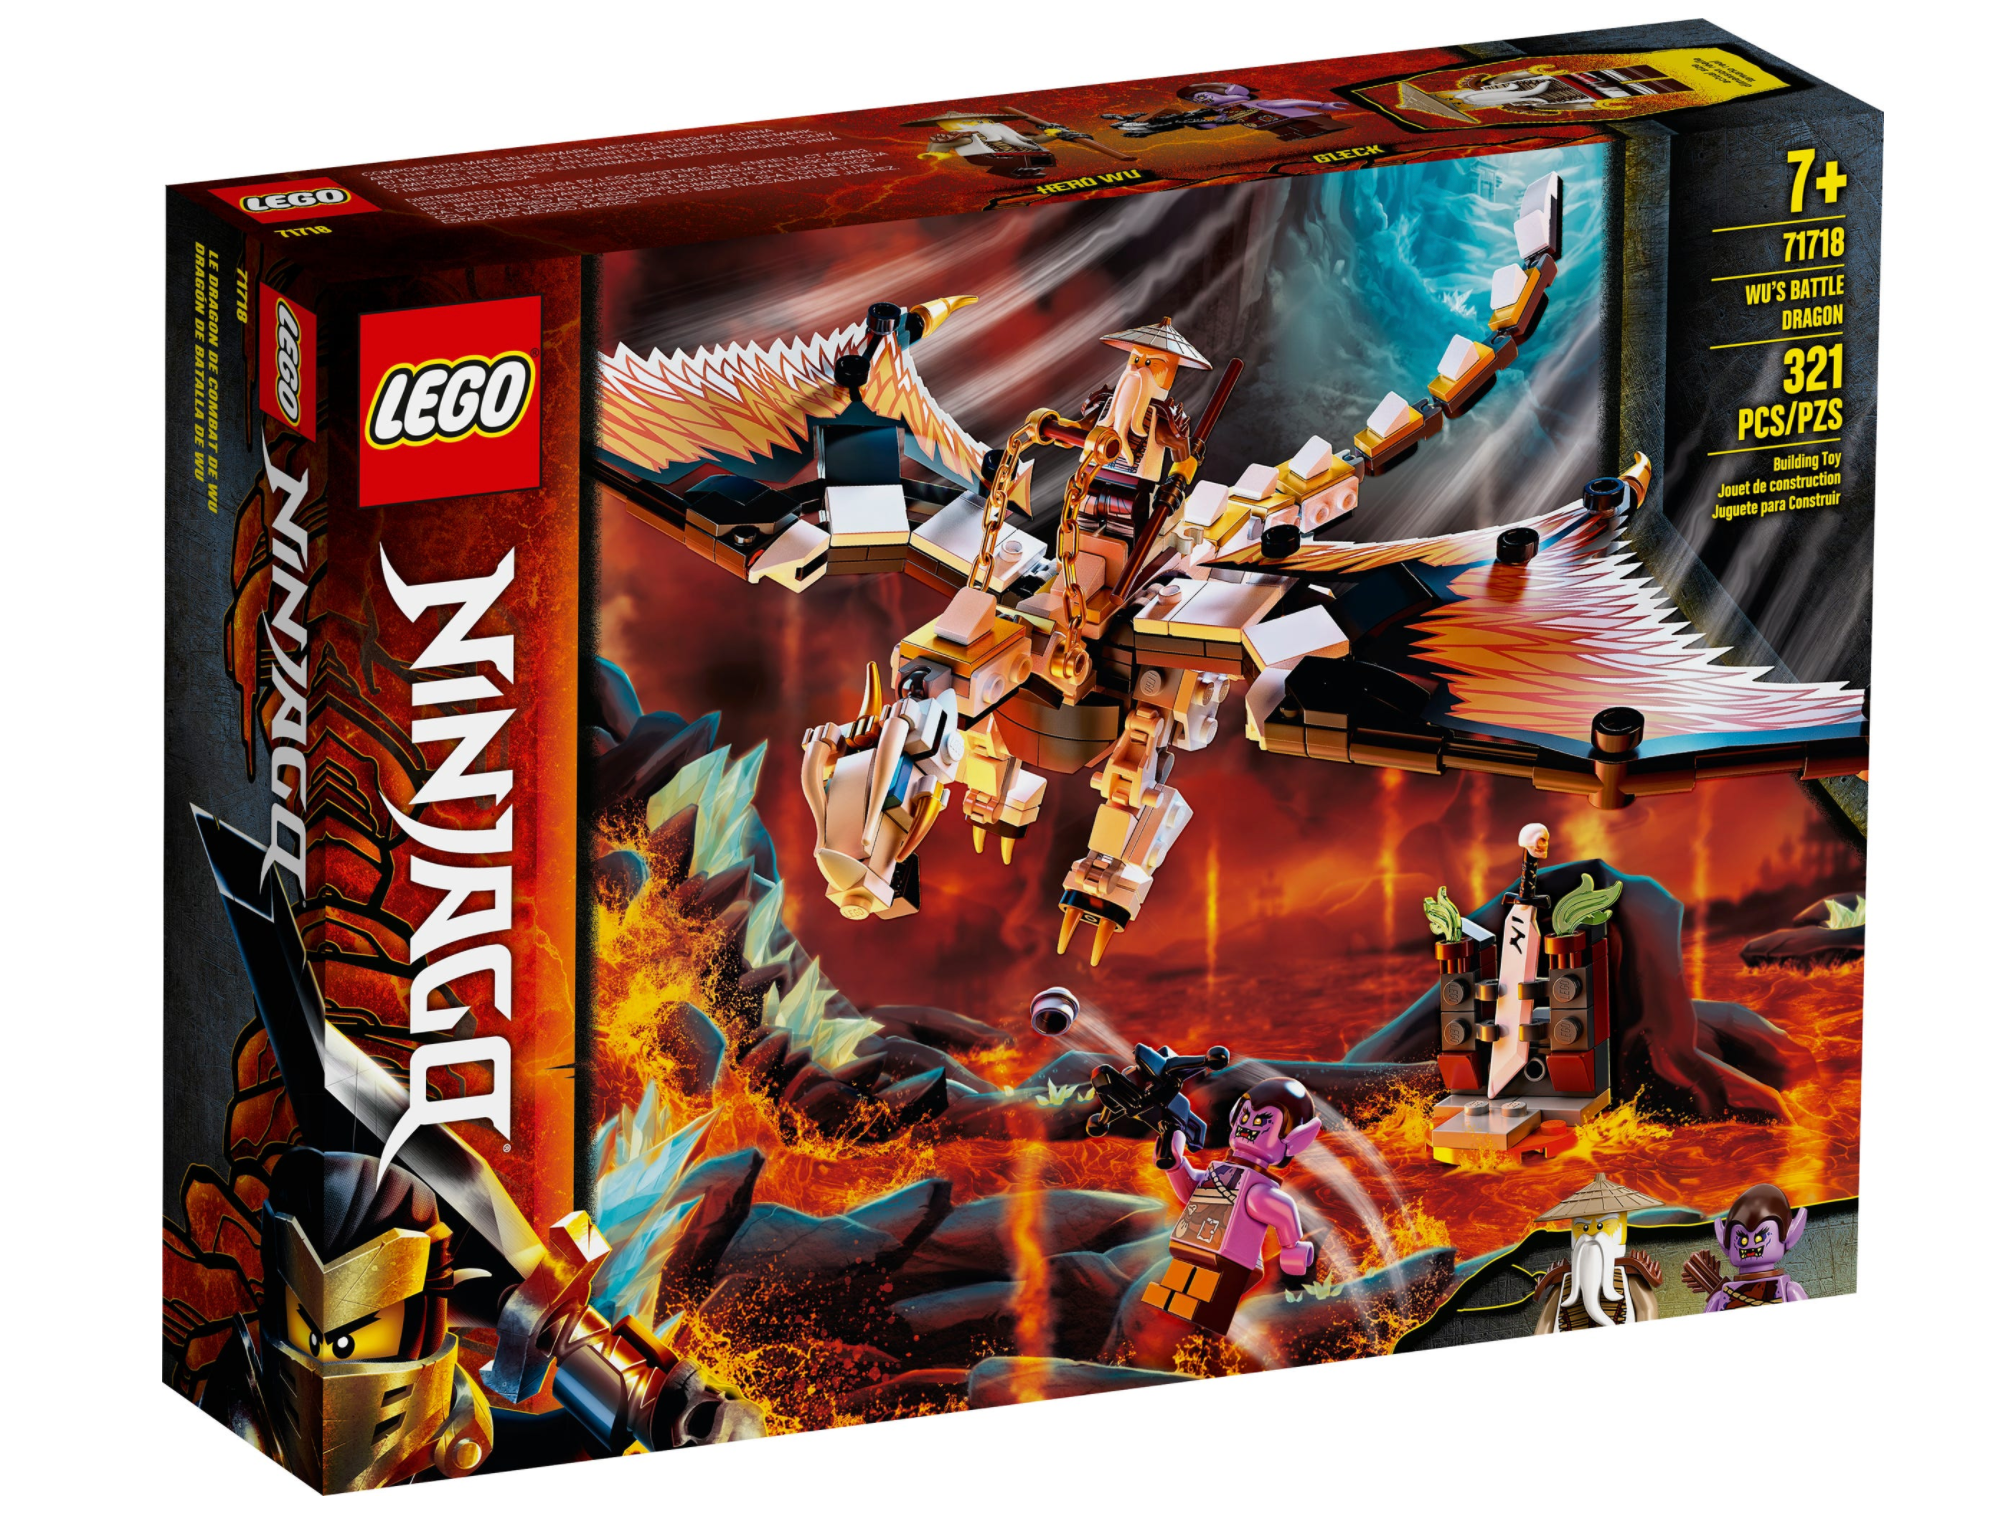 LEGO: Ninjago - Wu's Battle Dragon